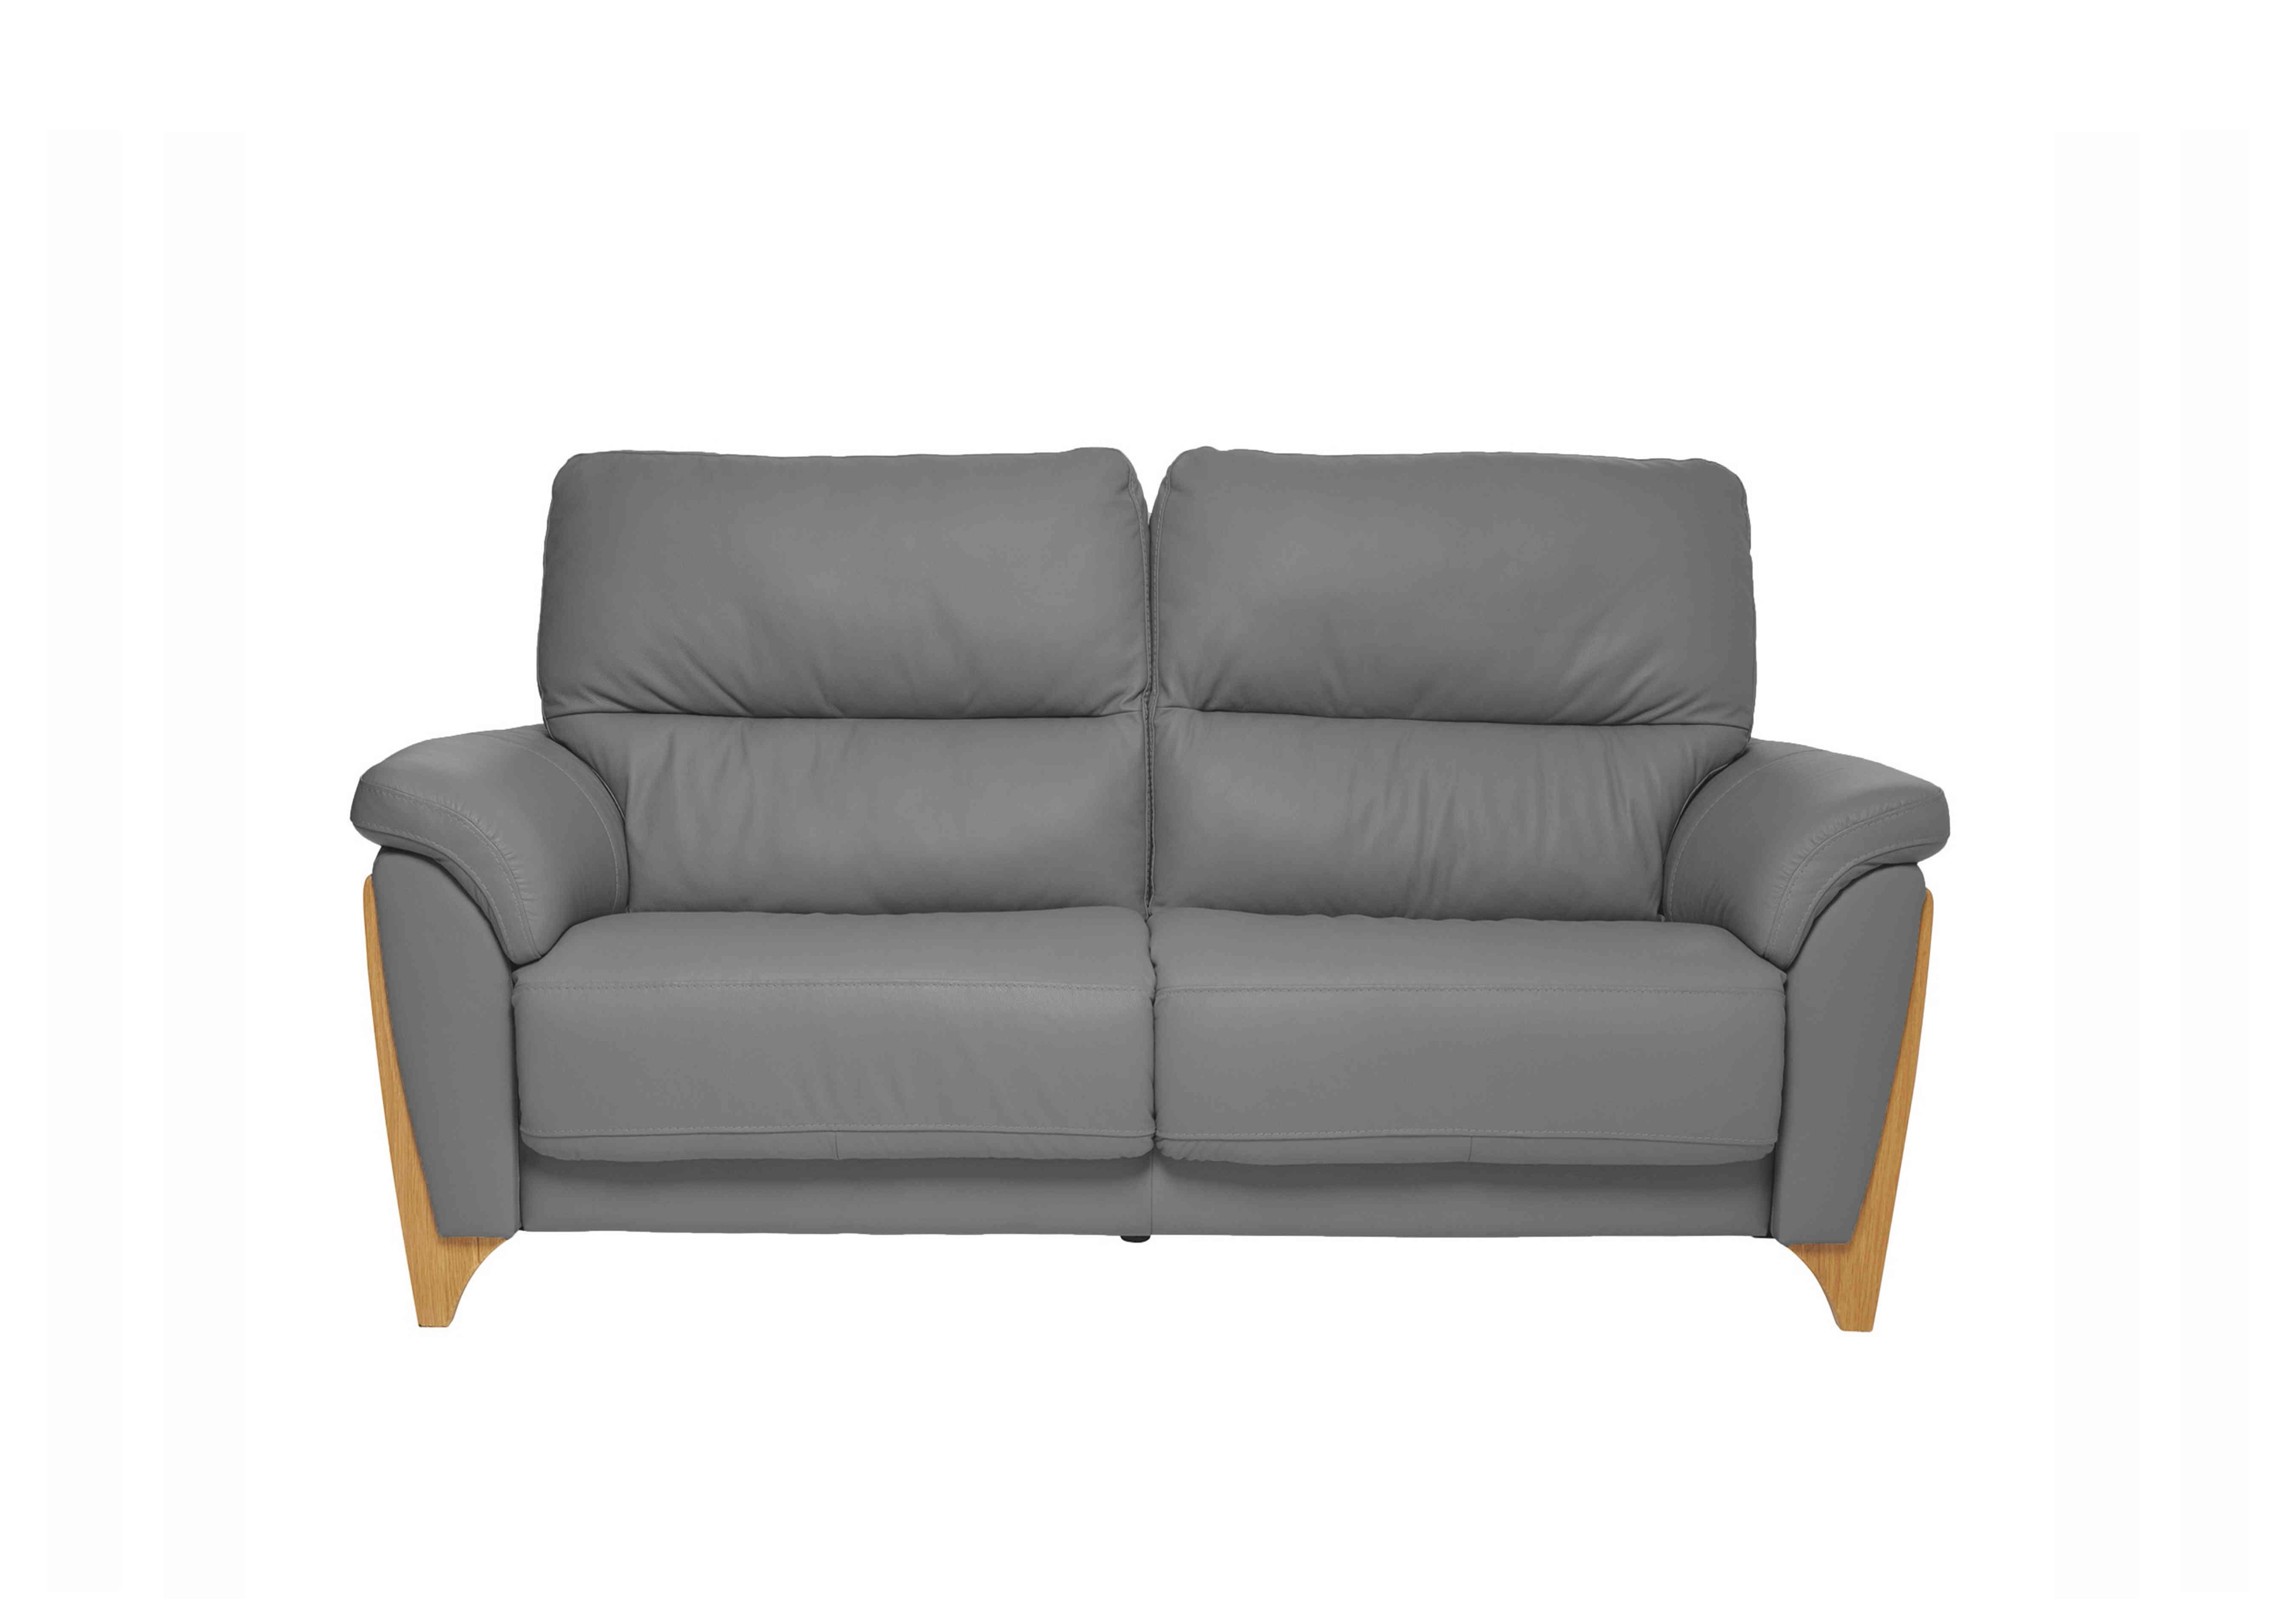 Enna Medium Leather Sofa in L956 on Furniture Village